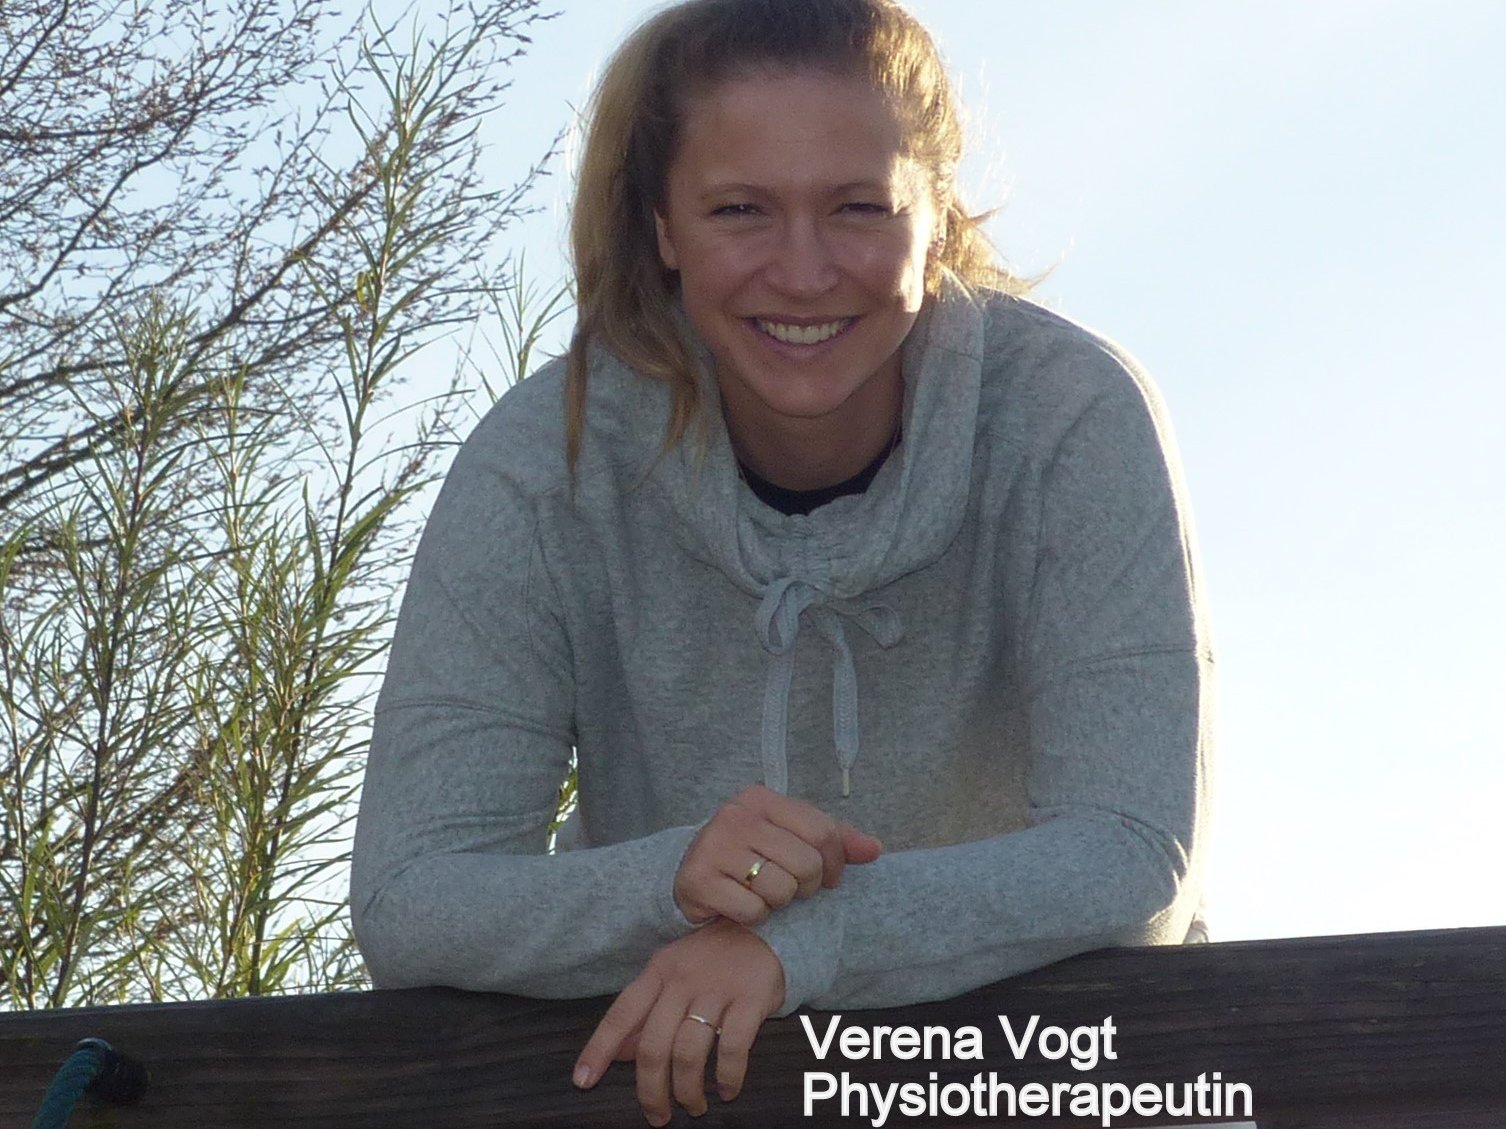 Verena Vogt